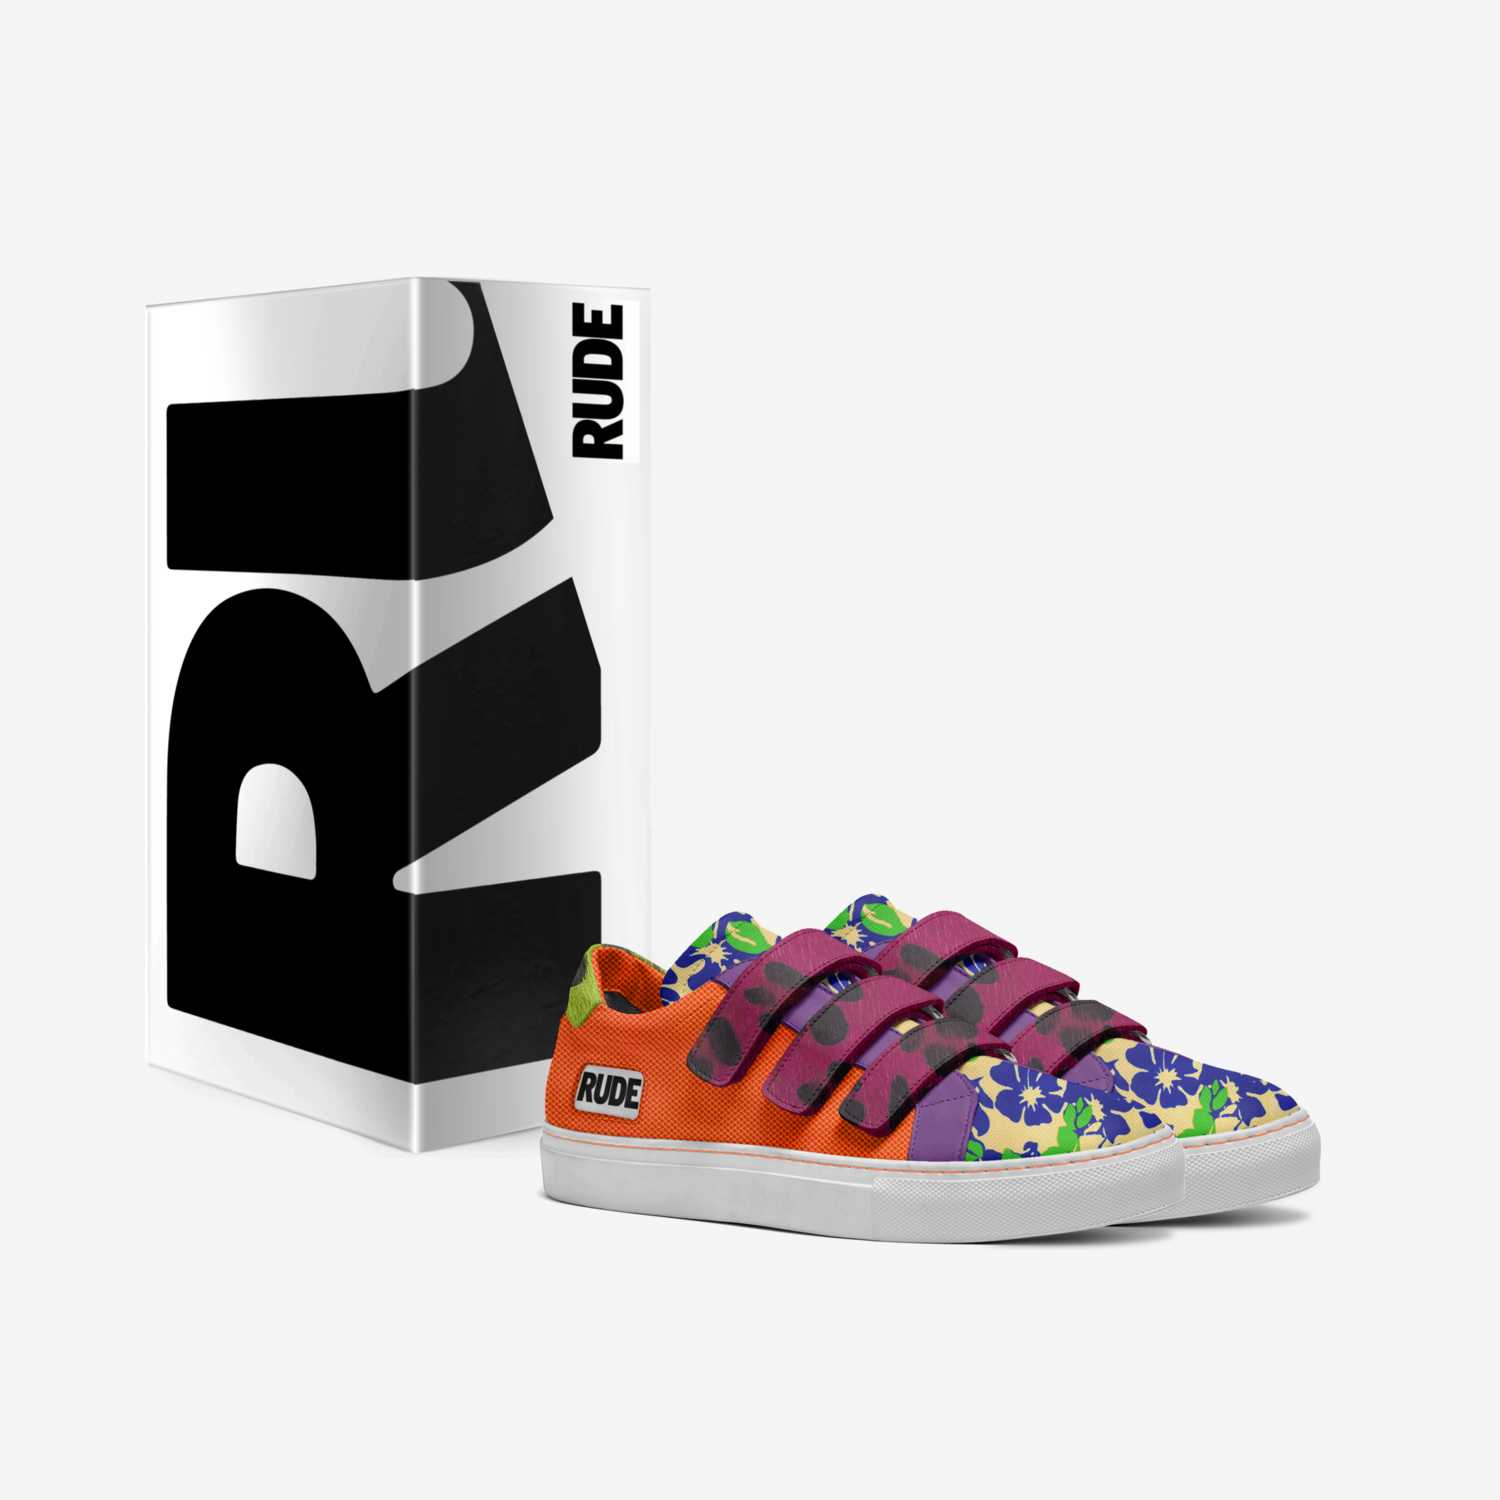 Bari custom made in Italy shoes by Kwasi Agyeman | Box view